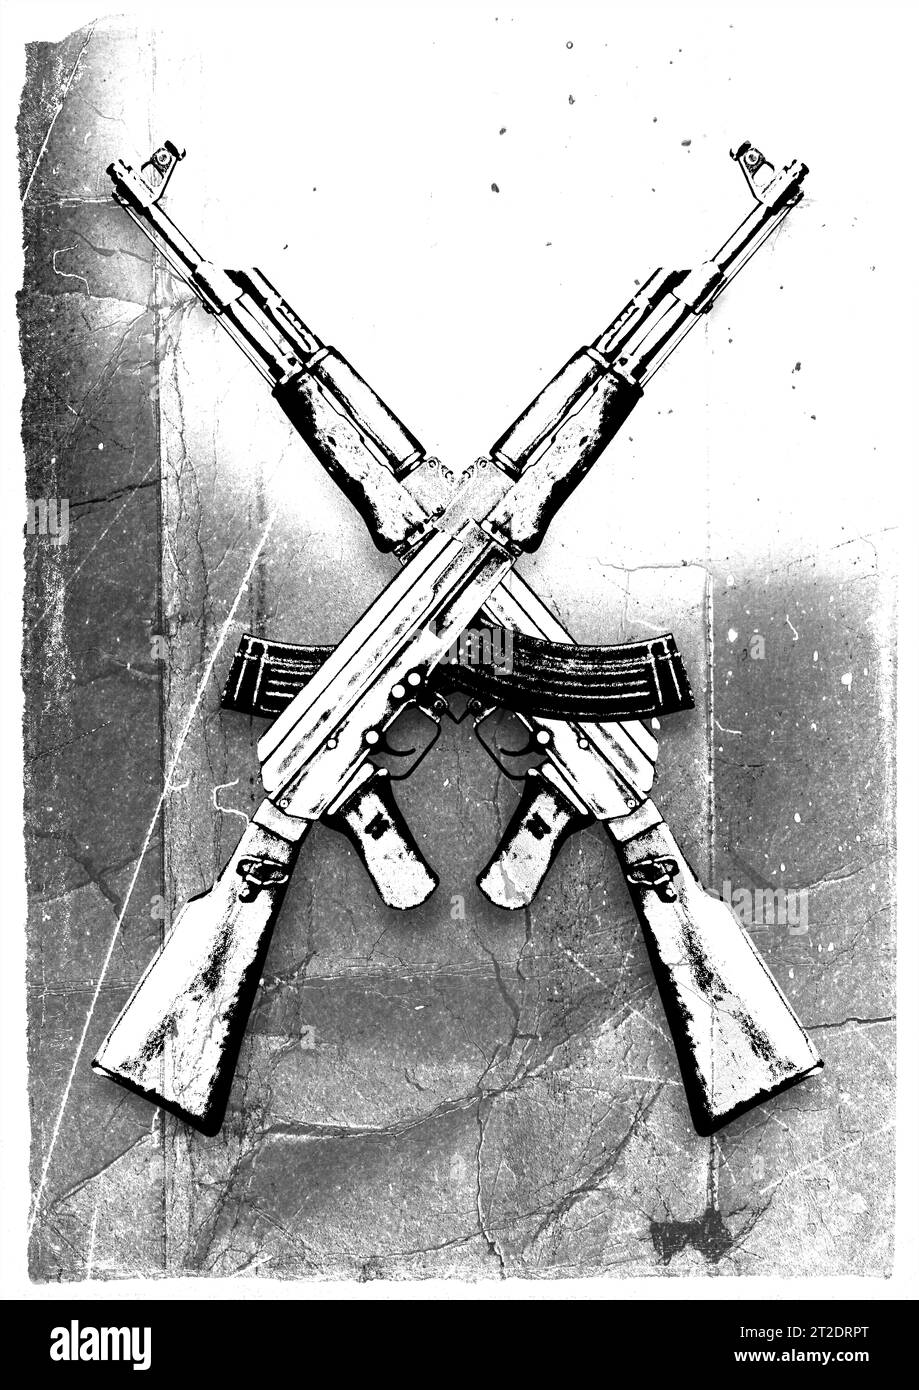 AK 47 poster kalashnikov arma militare vintage guerra terroristica dire no a guerra conflitto propaganda Foto Stock